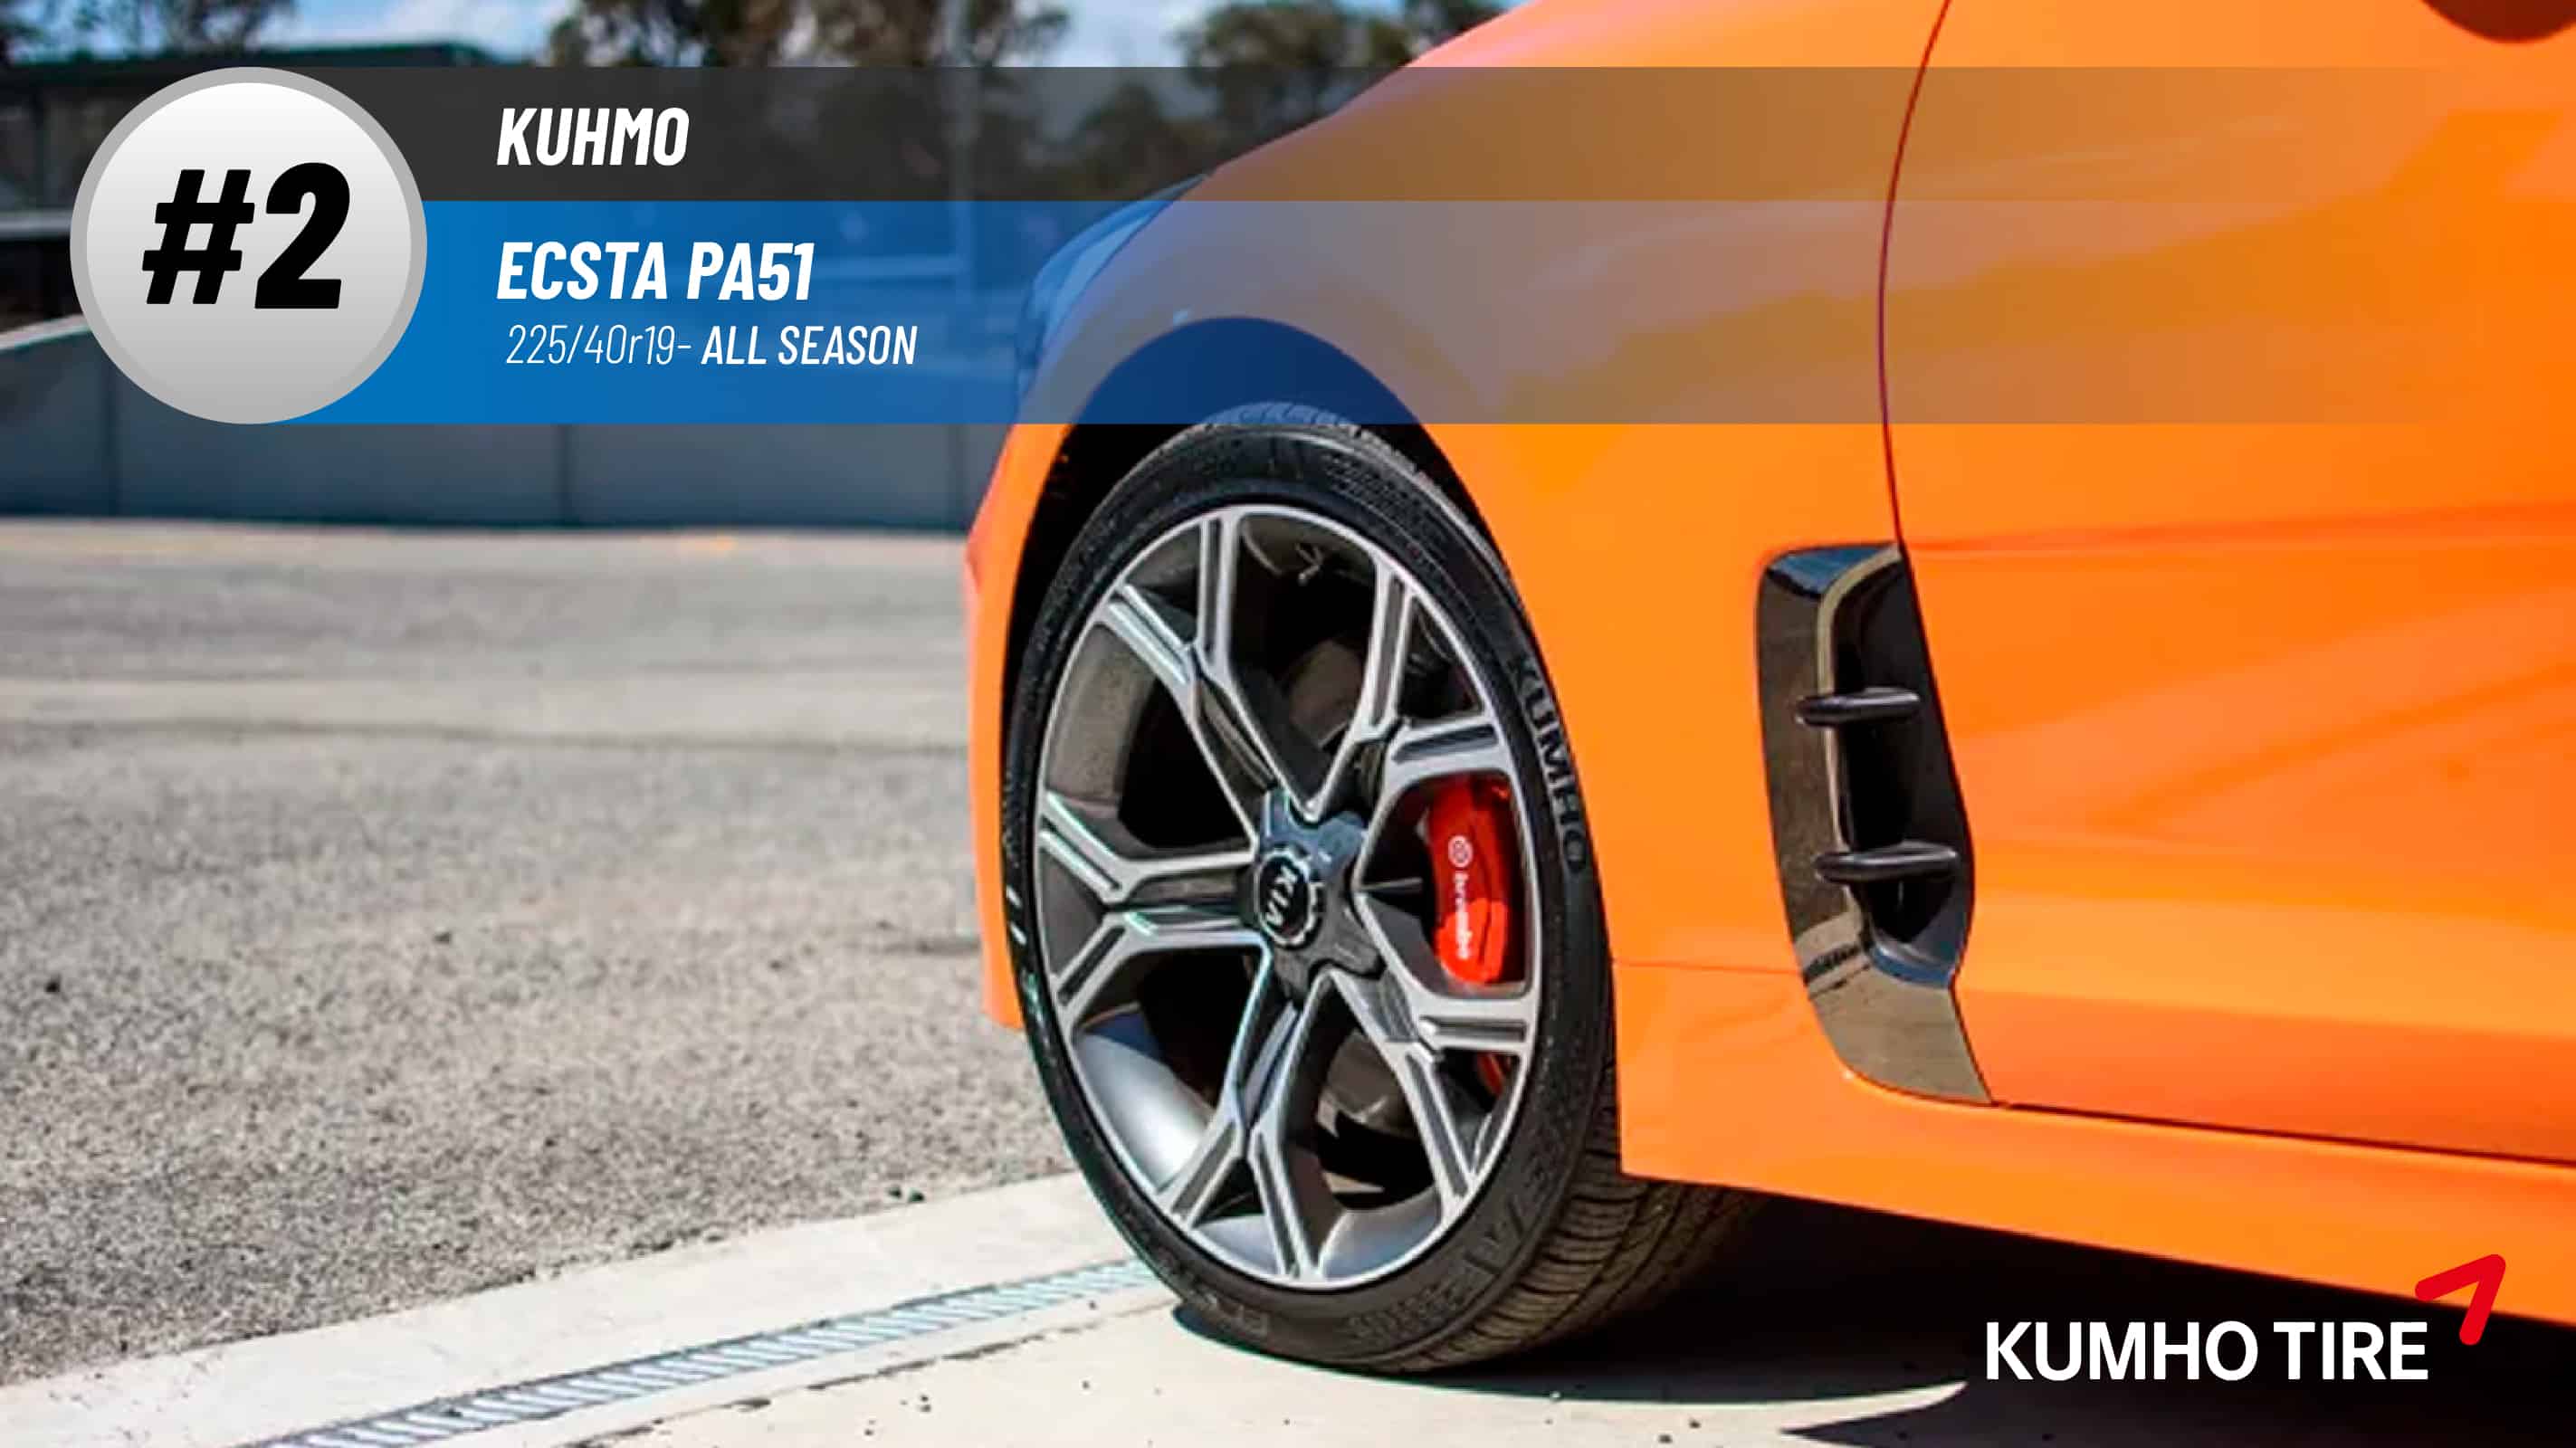 Top #2 All Season Tires: Kuhmo Ecsta PA51 –best 225/40r19